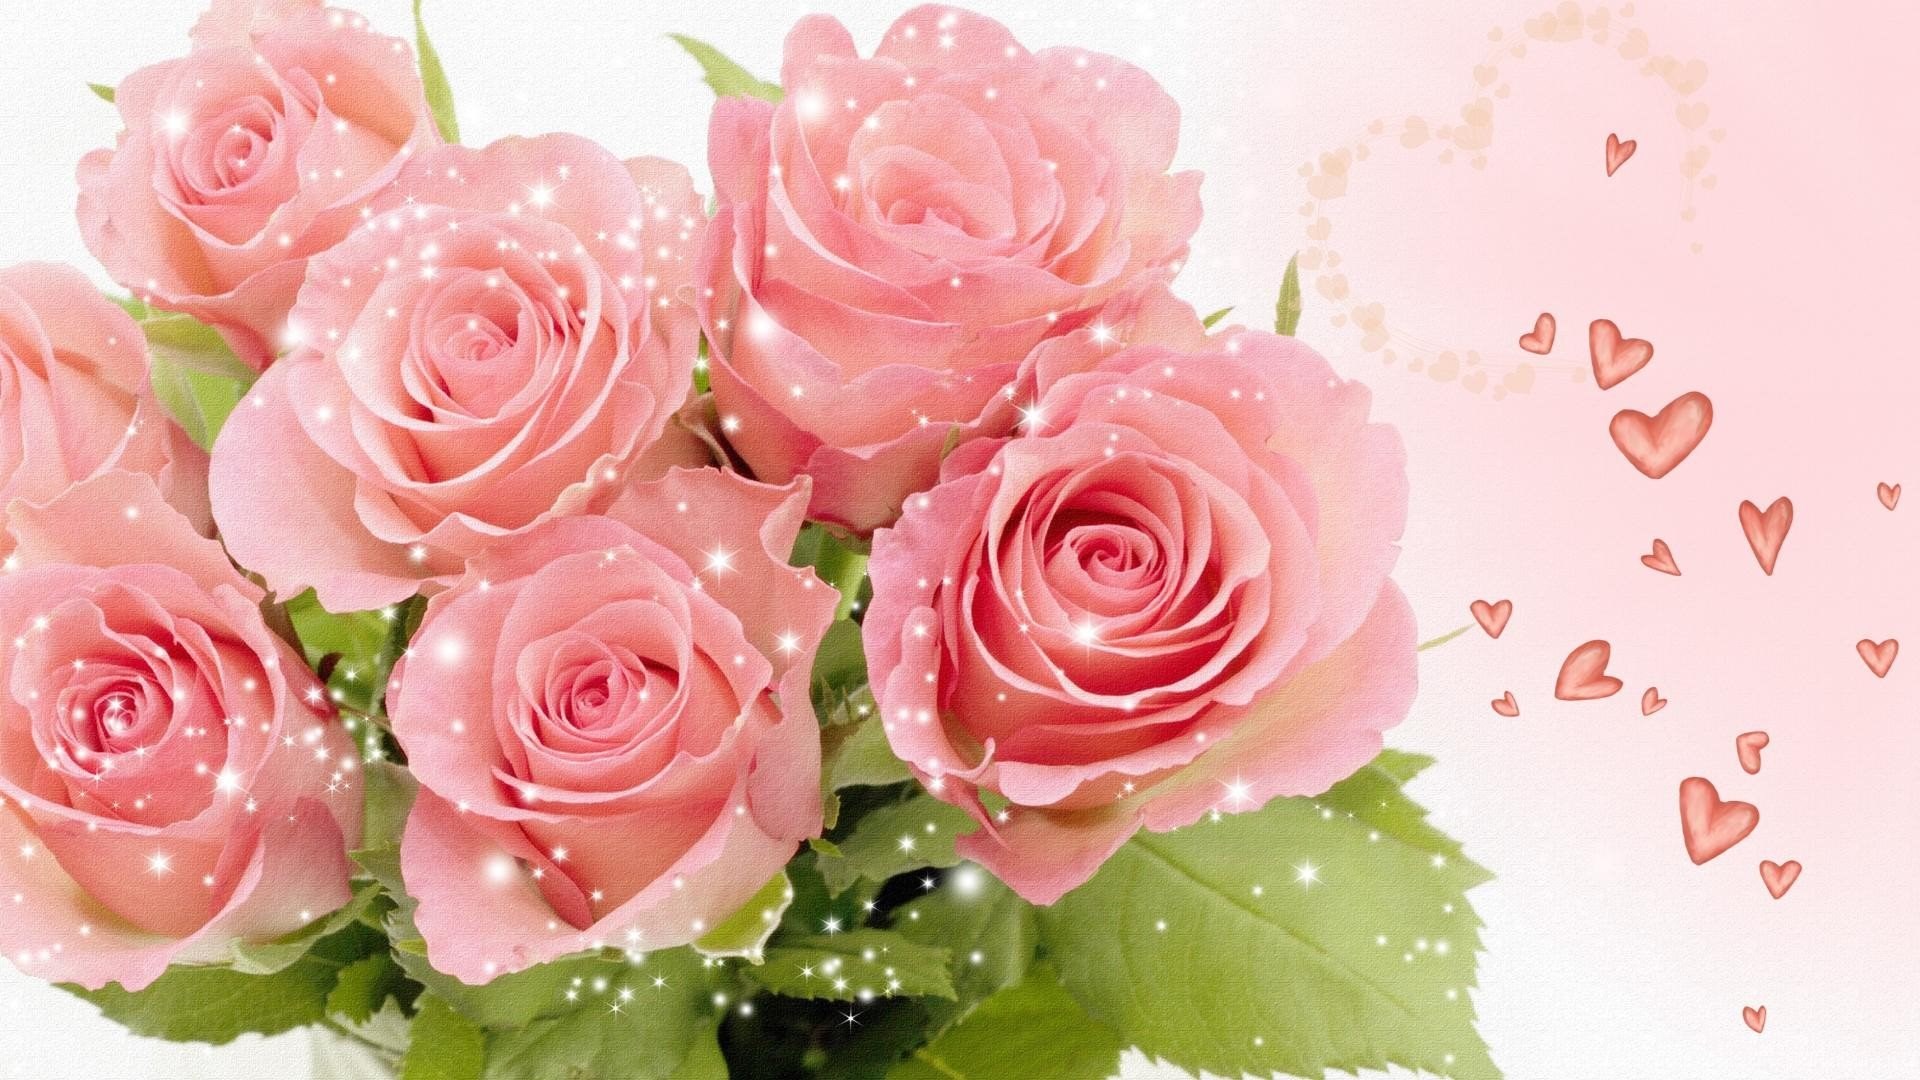 I Love You Flowers Wallpapers HD Download Of Love Flower Desktop Background